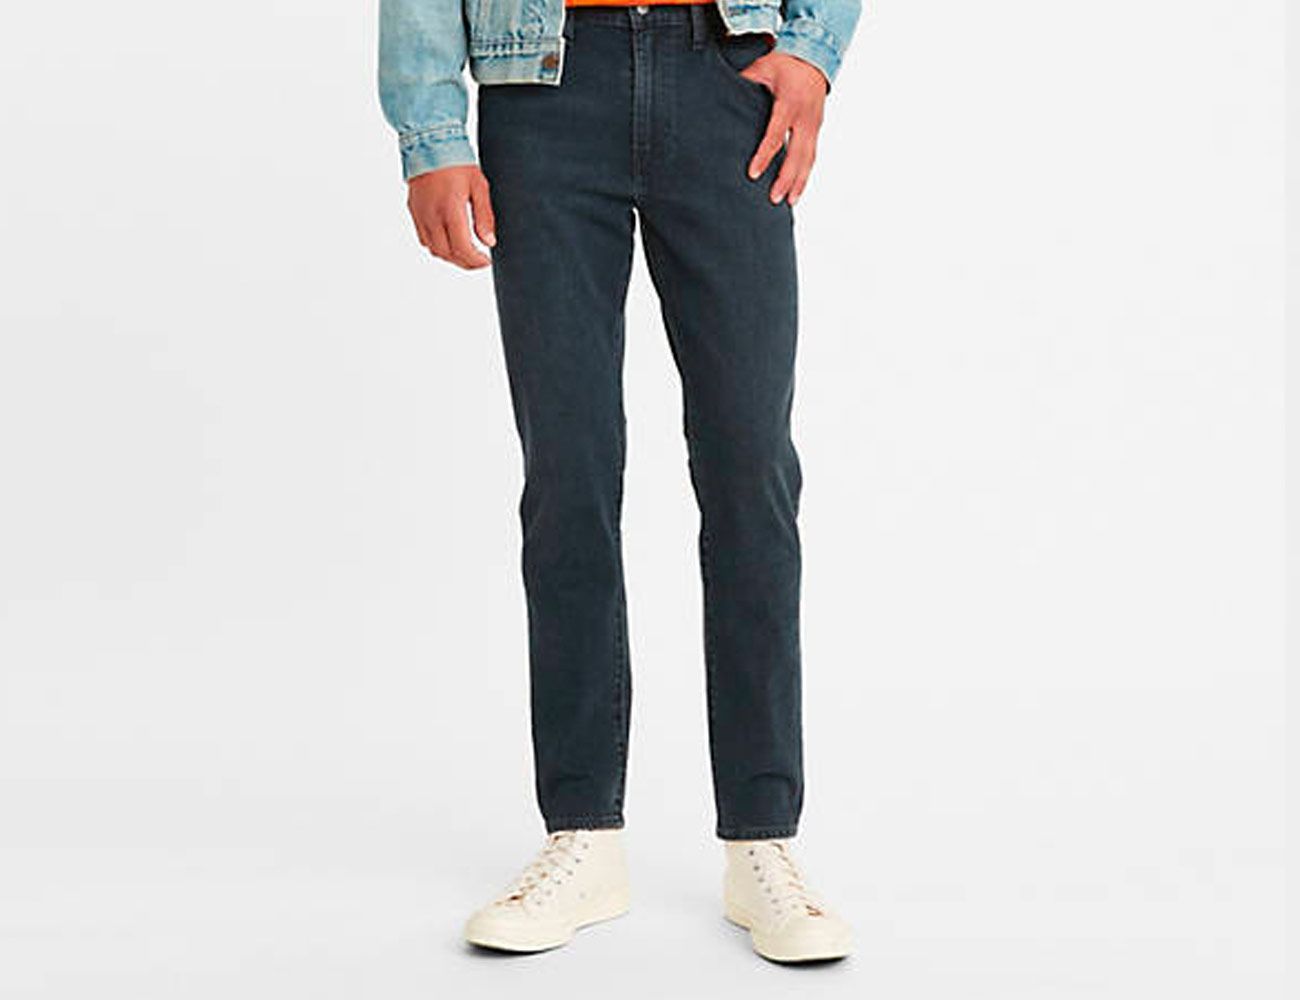 Levi Wedgie Skinny Jeans Shop Buy, Save 56% 